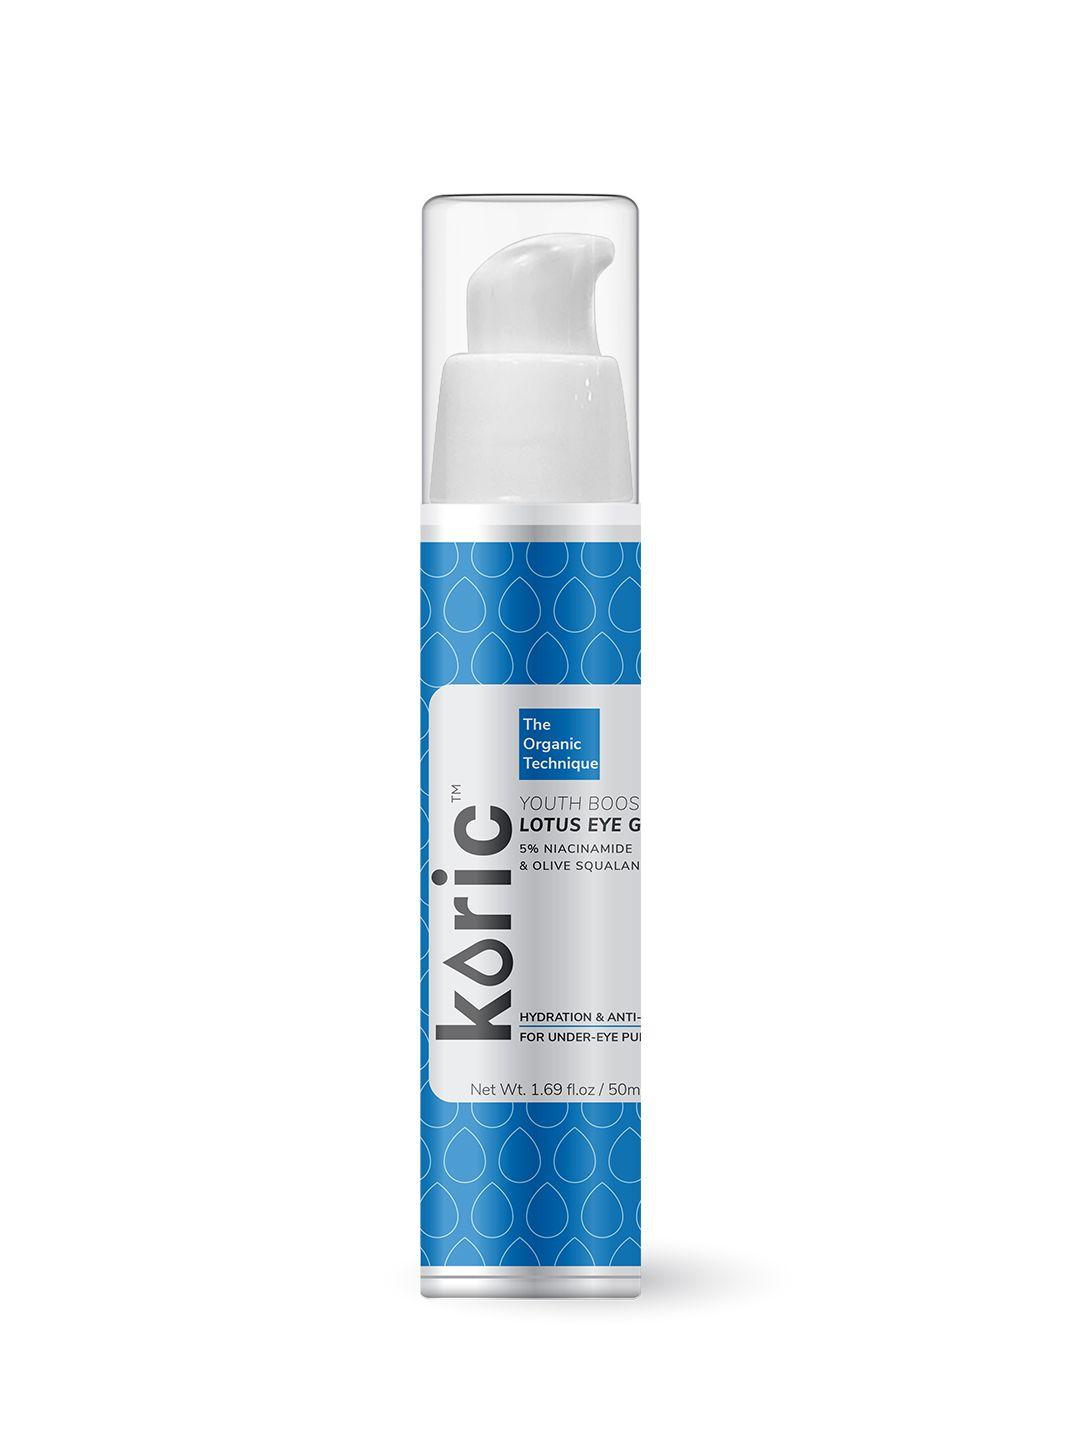 koric youth boost lotus eye gel with 5% niacinamide & olive squalane 50 ml